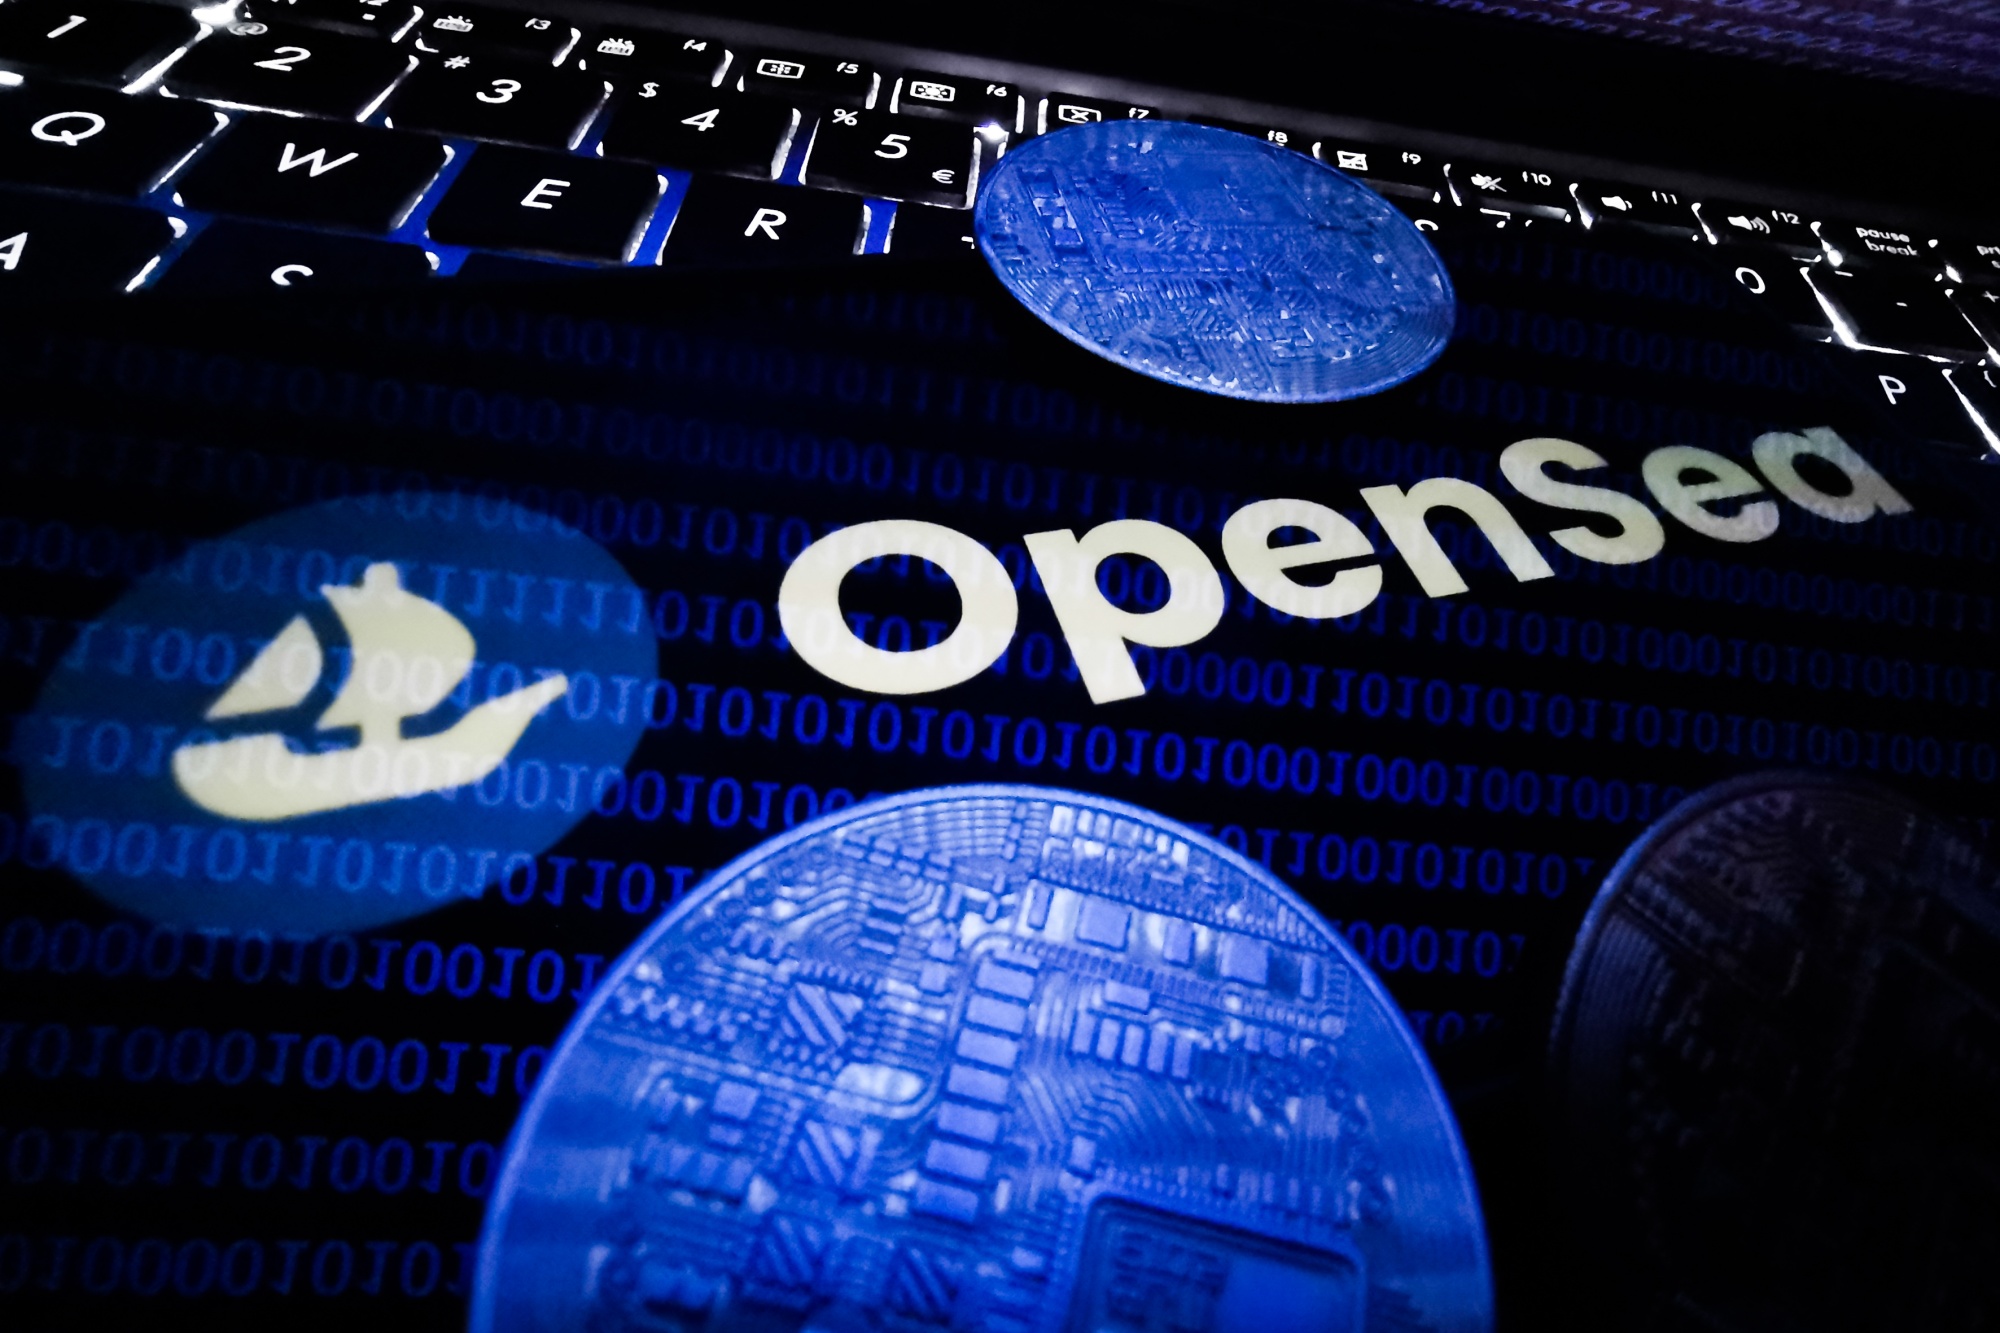 LooksRare VS OpenSea: Key Differences - Blockchain Council